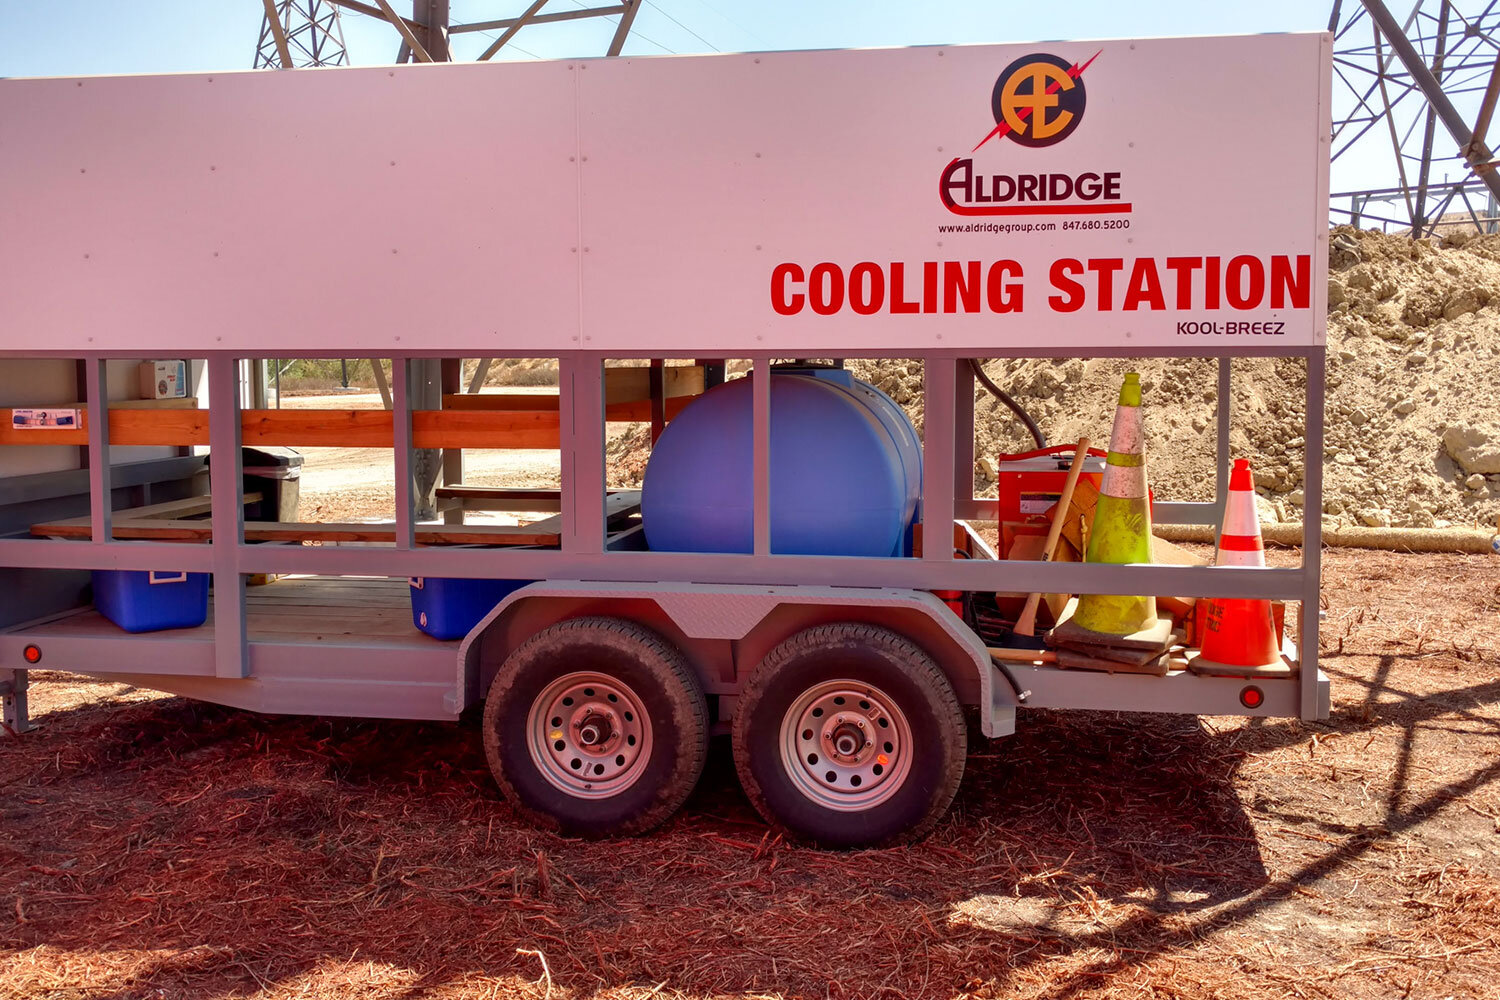 cooling-station-truck-aldridge-electric-IIF-safety-nationwide.jpg